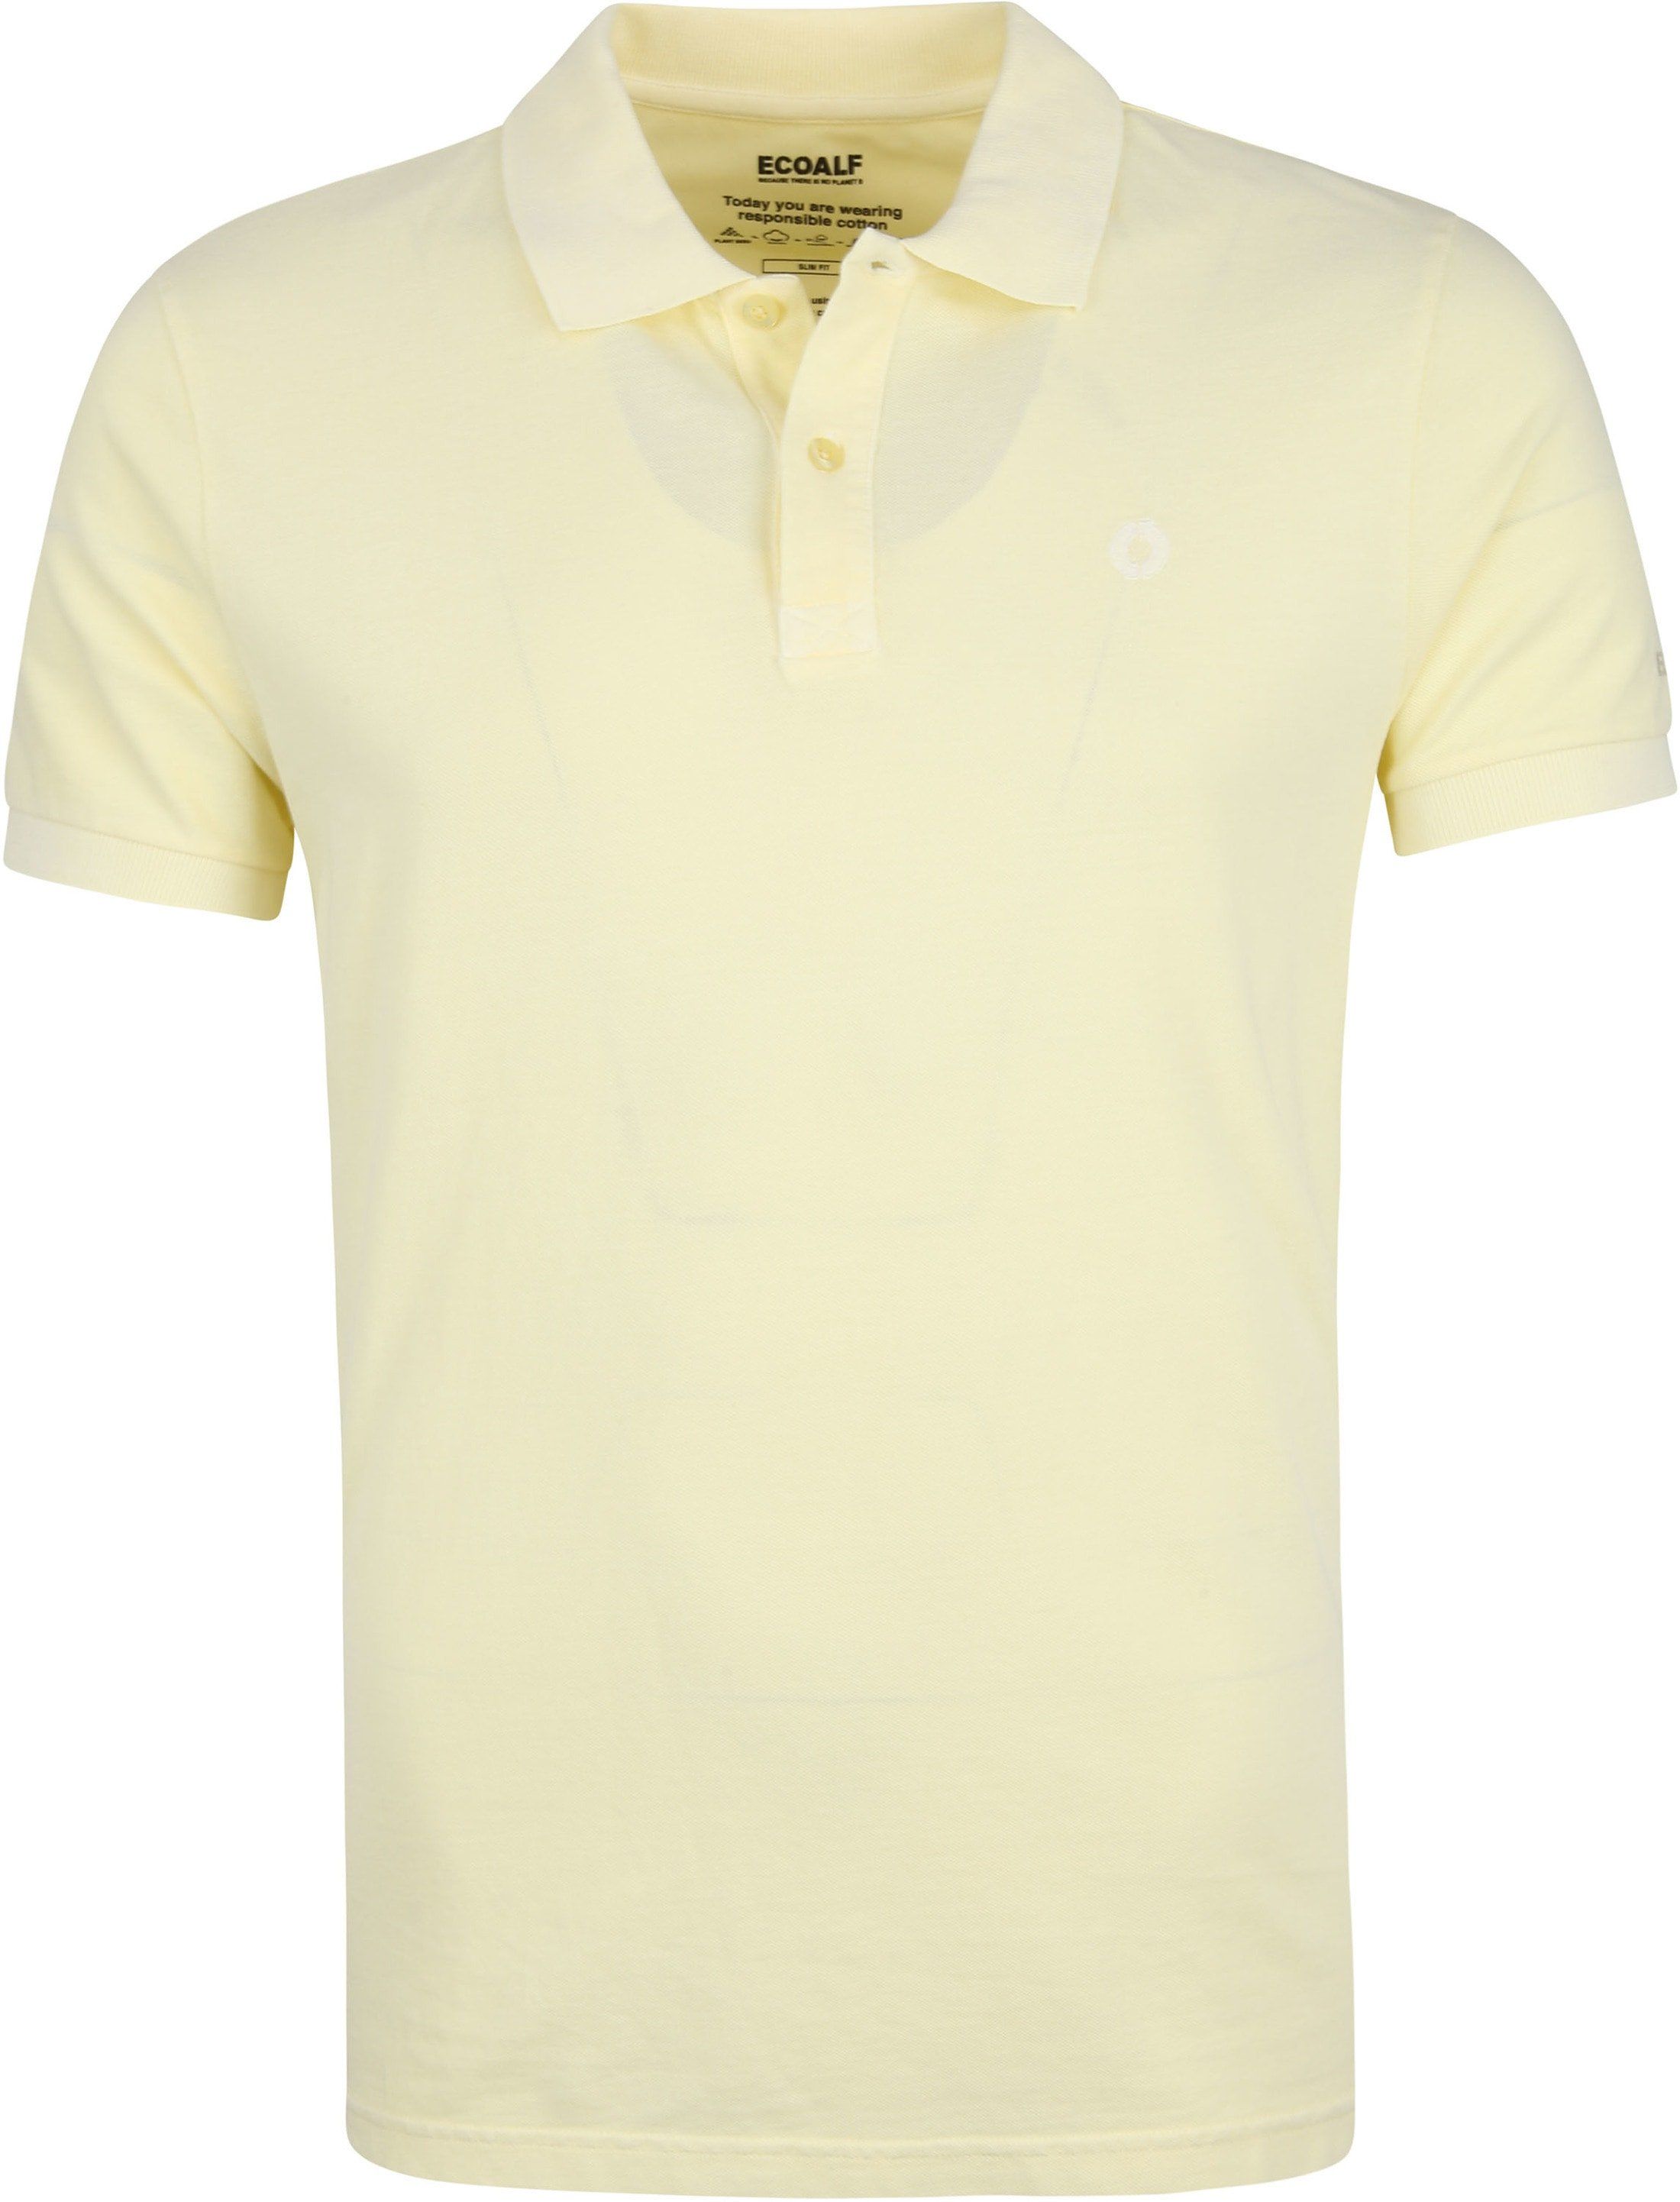 Ecoalf Polo Shirt Sustainable Cotton Yellow size L